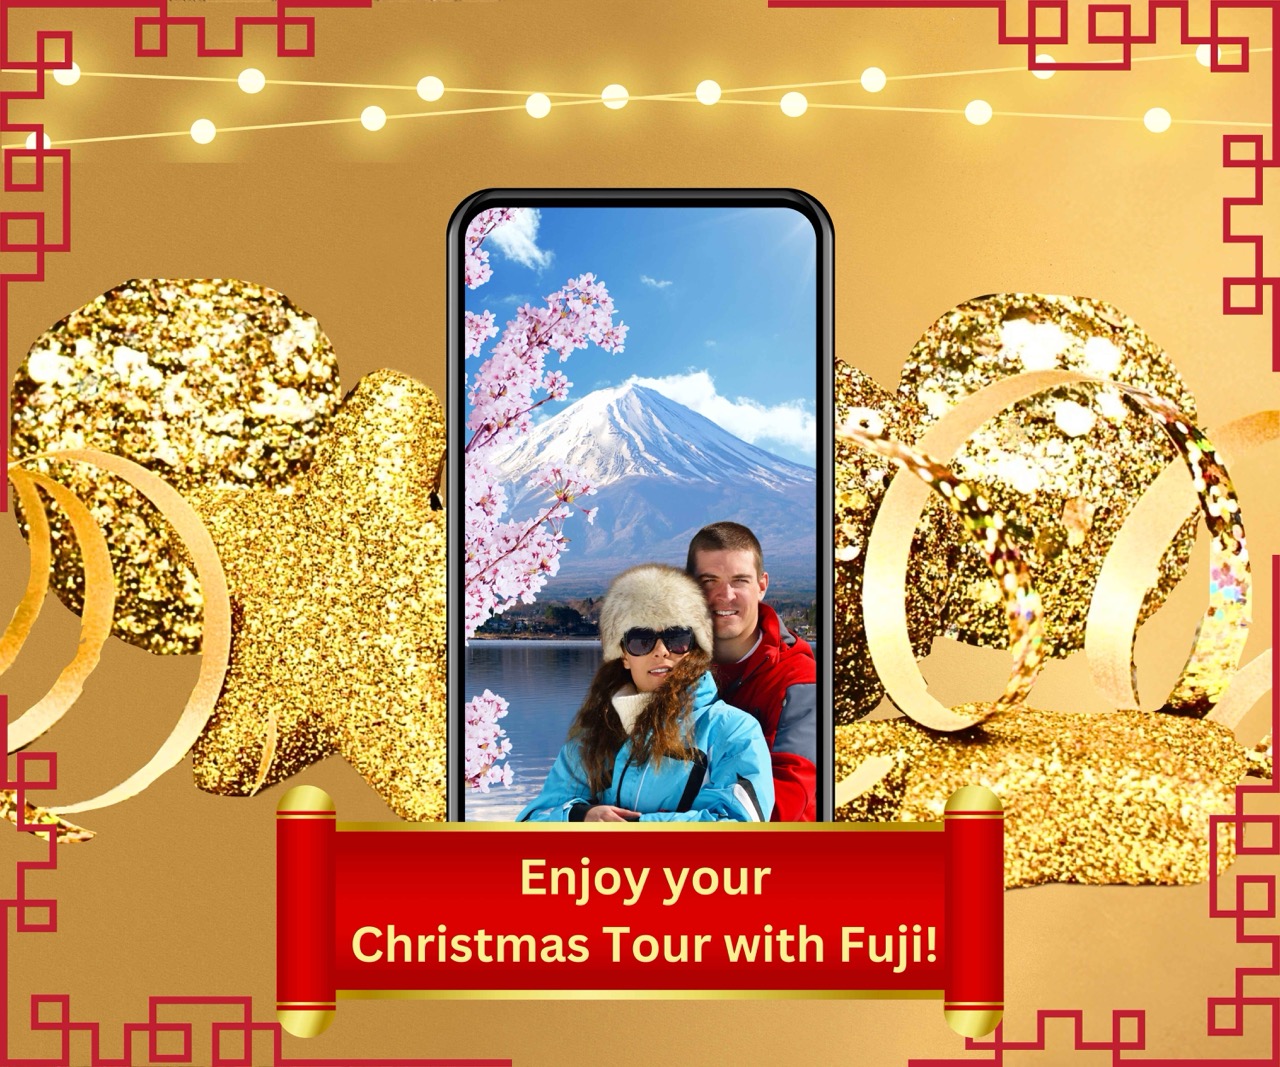 Enjoy your Christmas Tour with Fuji!